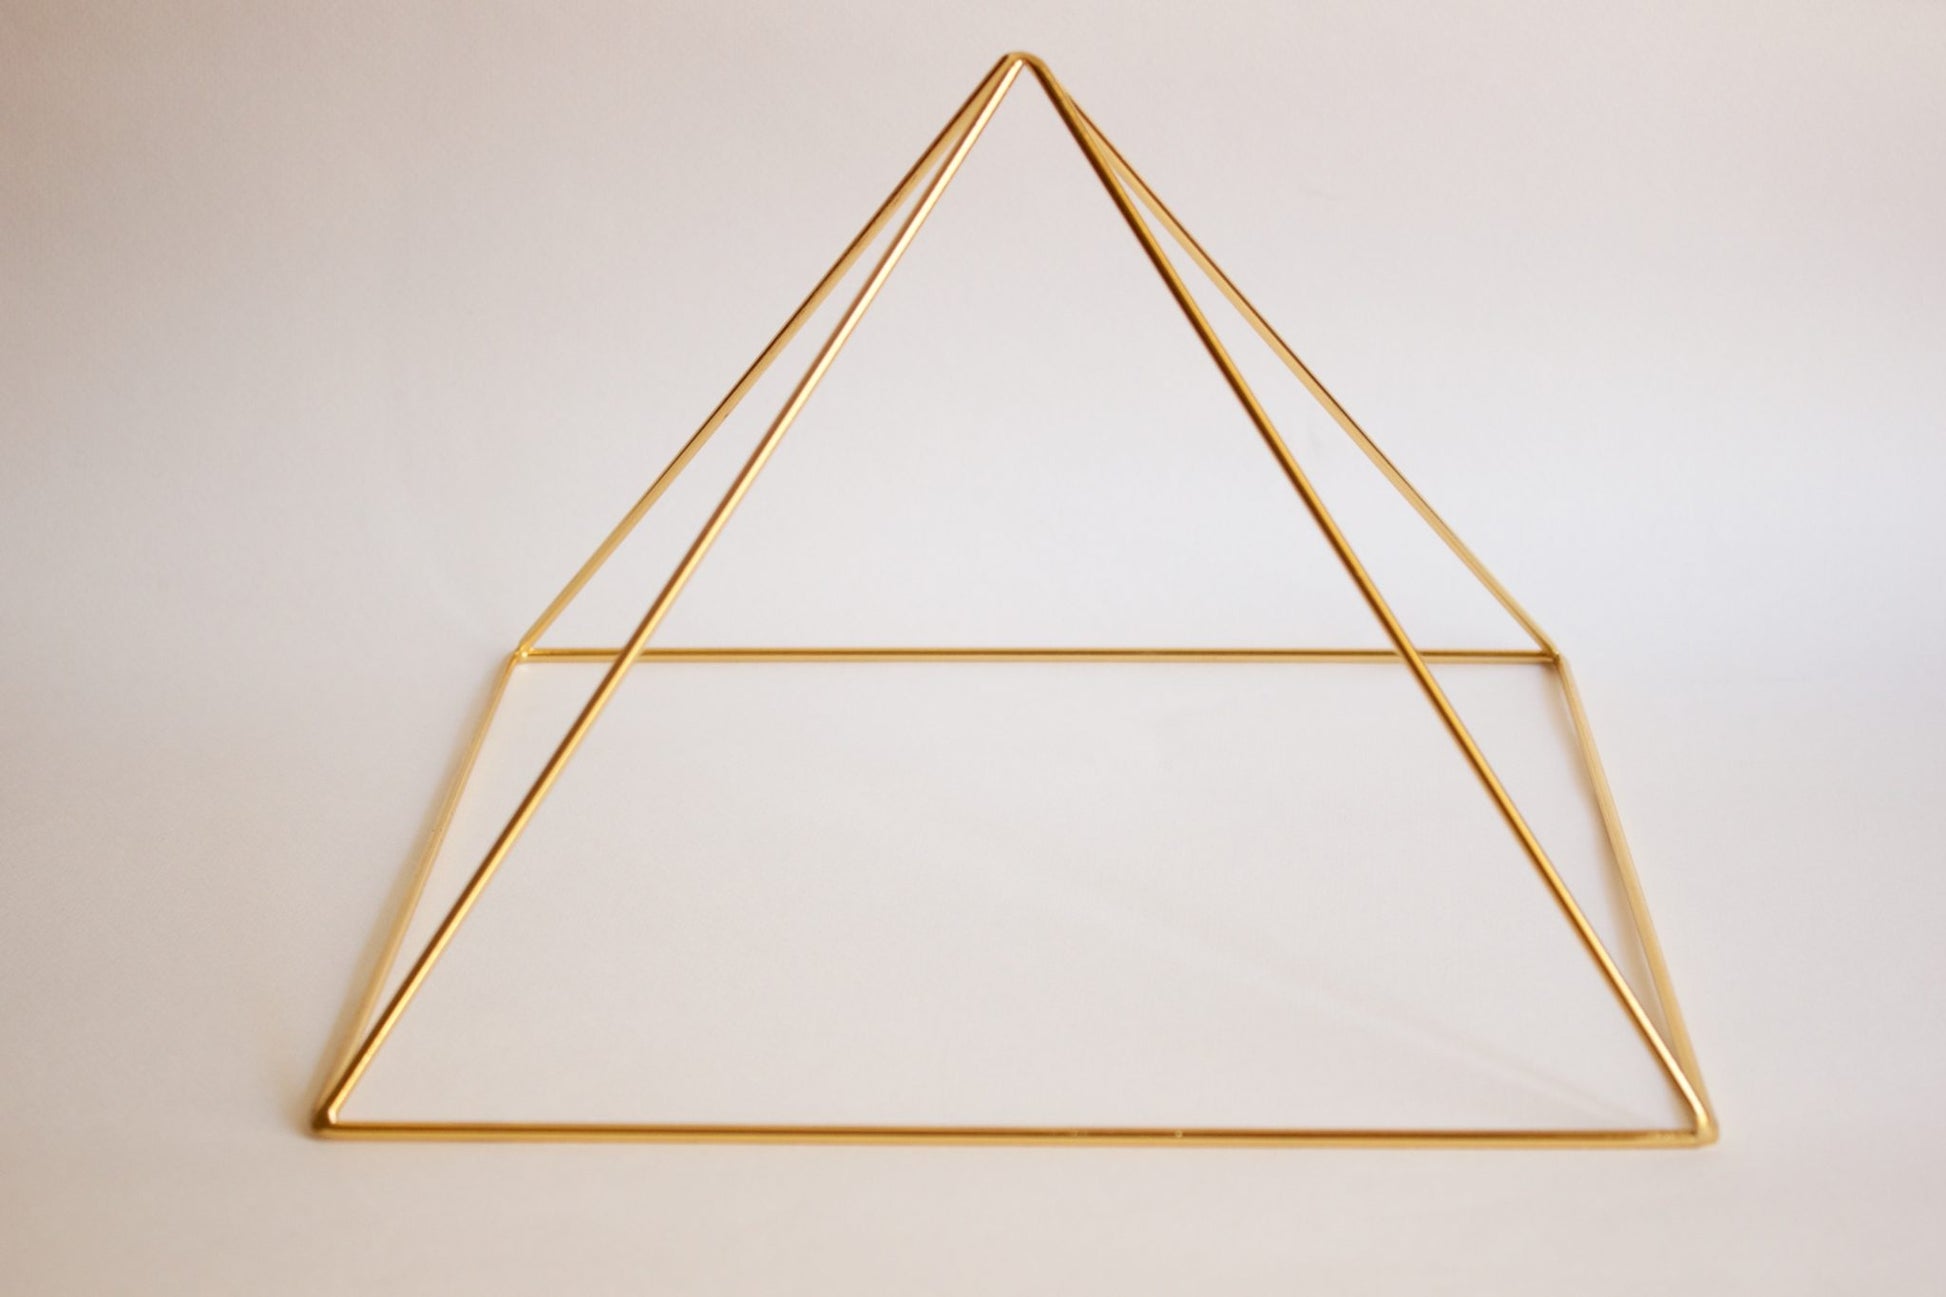 Gold 24k plated Meditation Pyramid